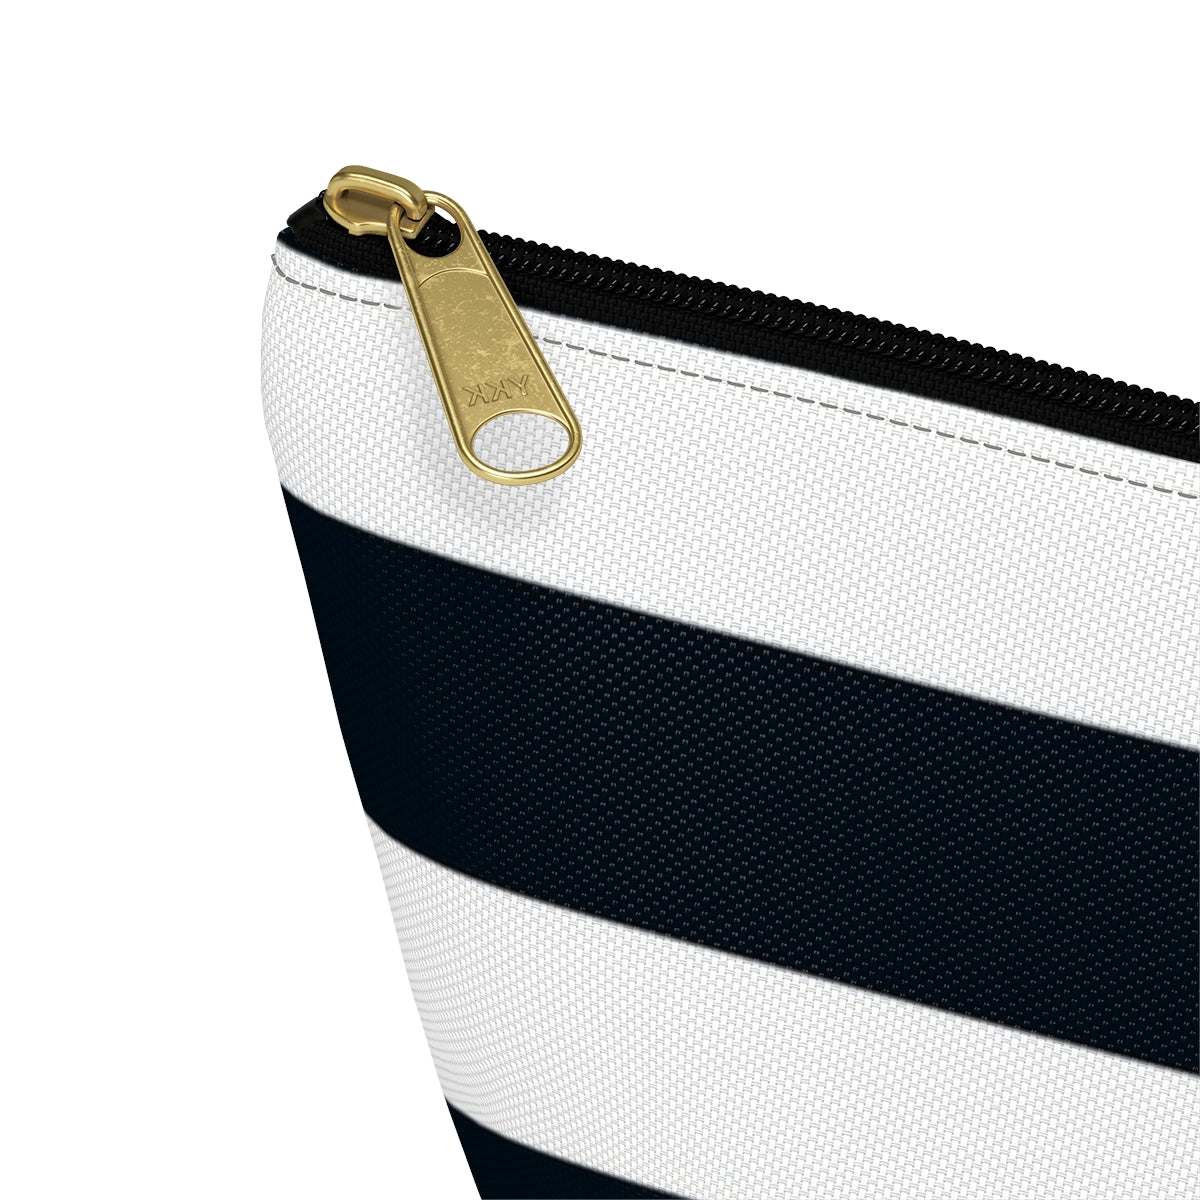 Big Bottom Zipper Pouch - Navy/White Stripes